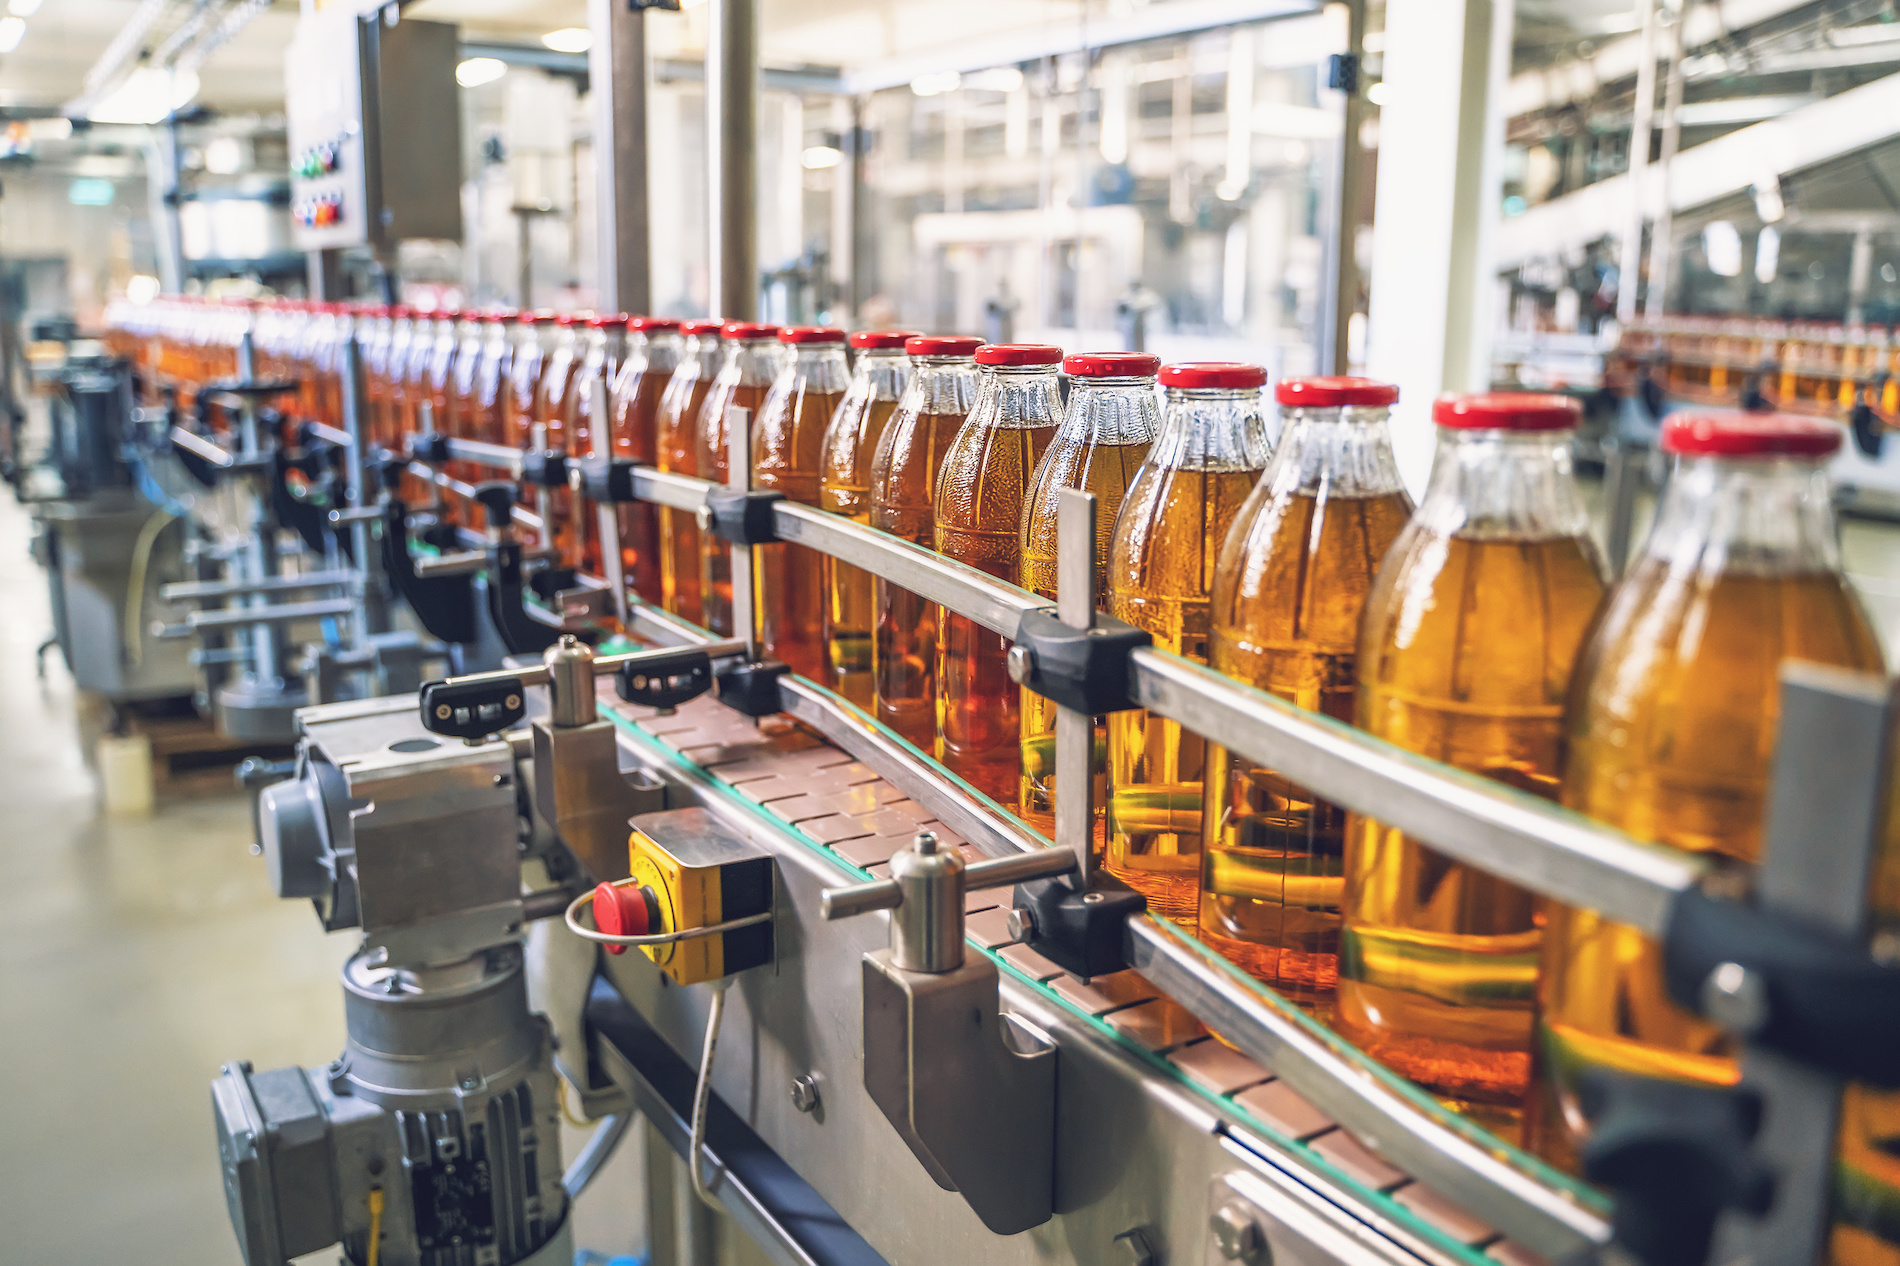 Conveyor belt, juice in glass bottles on beverage plant or factory interior, industrial manufacturing production line